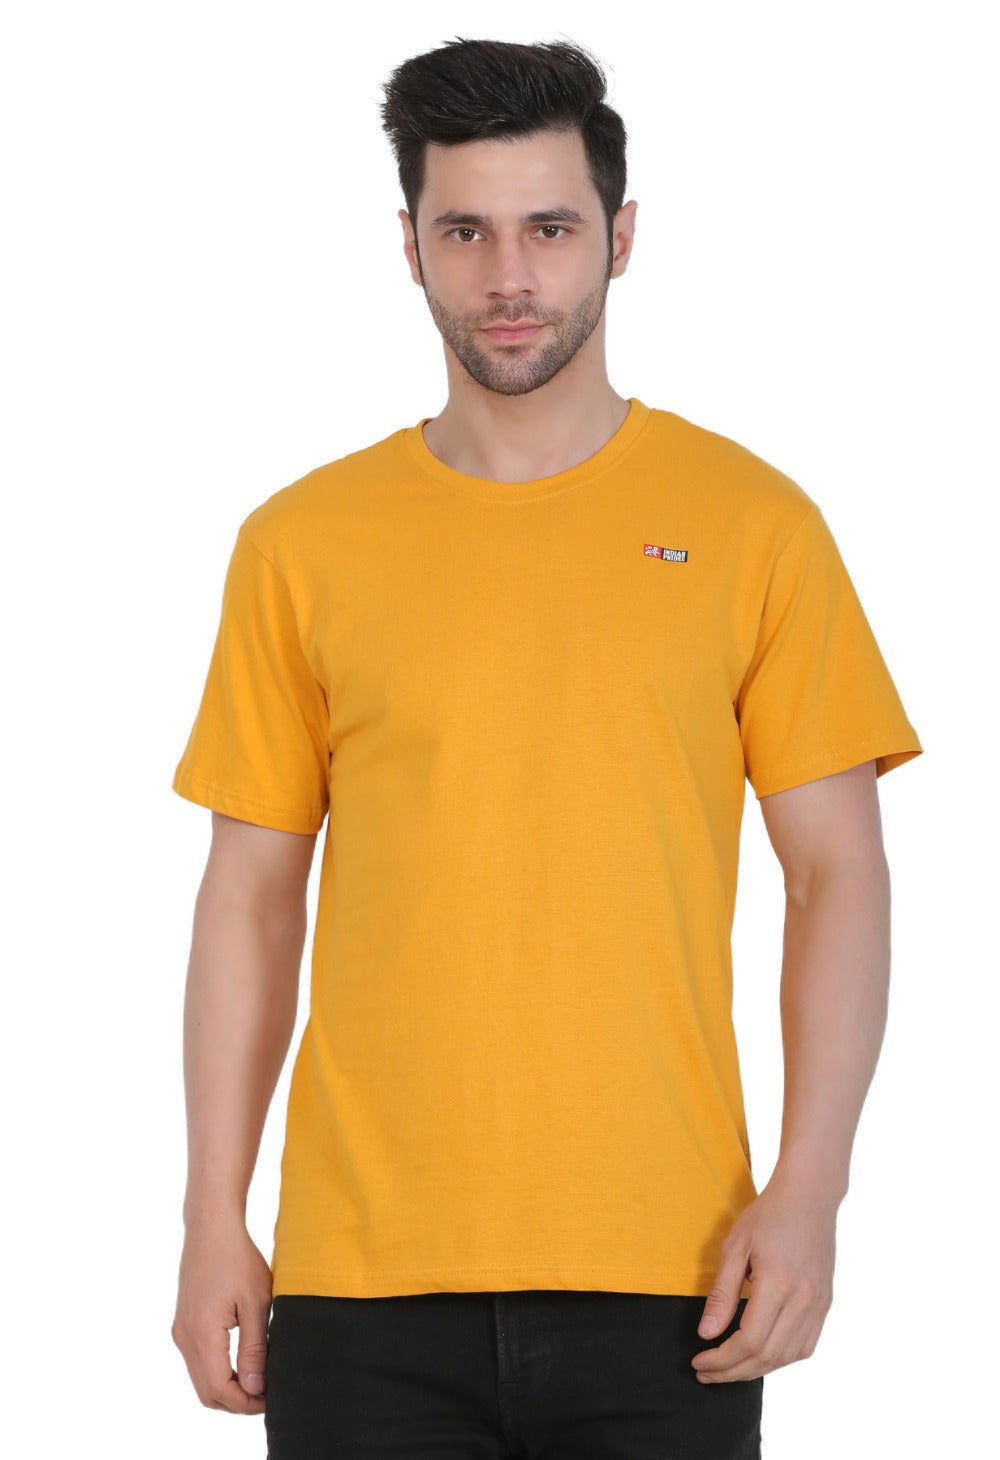 Men's Cotton Jersey Round Neck Plain Tshirt (Mustard Yellow) - GillKart